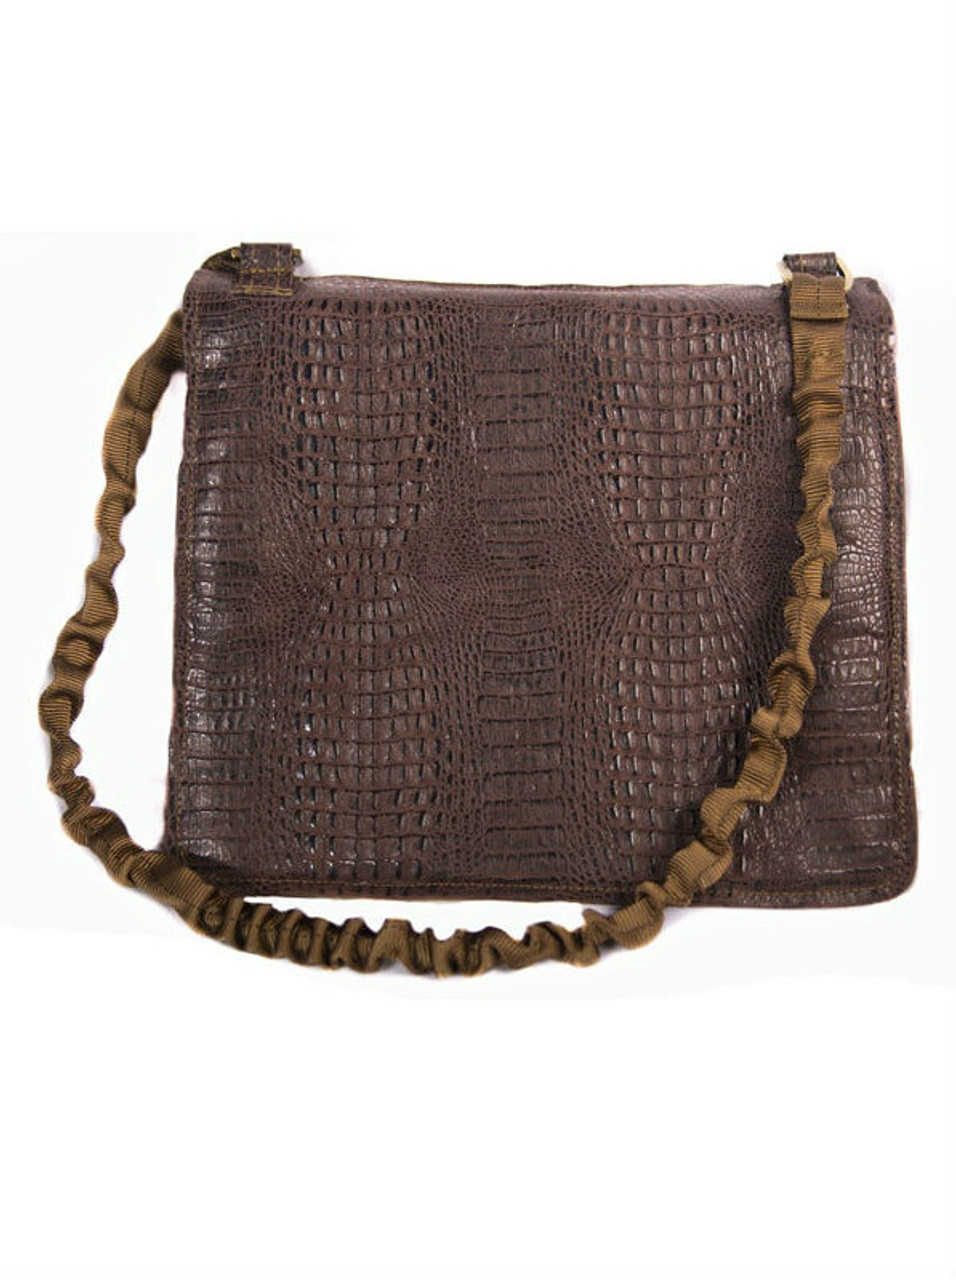 NORB - Leather Range Bag in dark esspresso color with ebossed crocodile ...